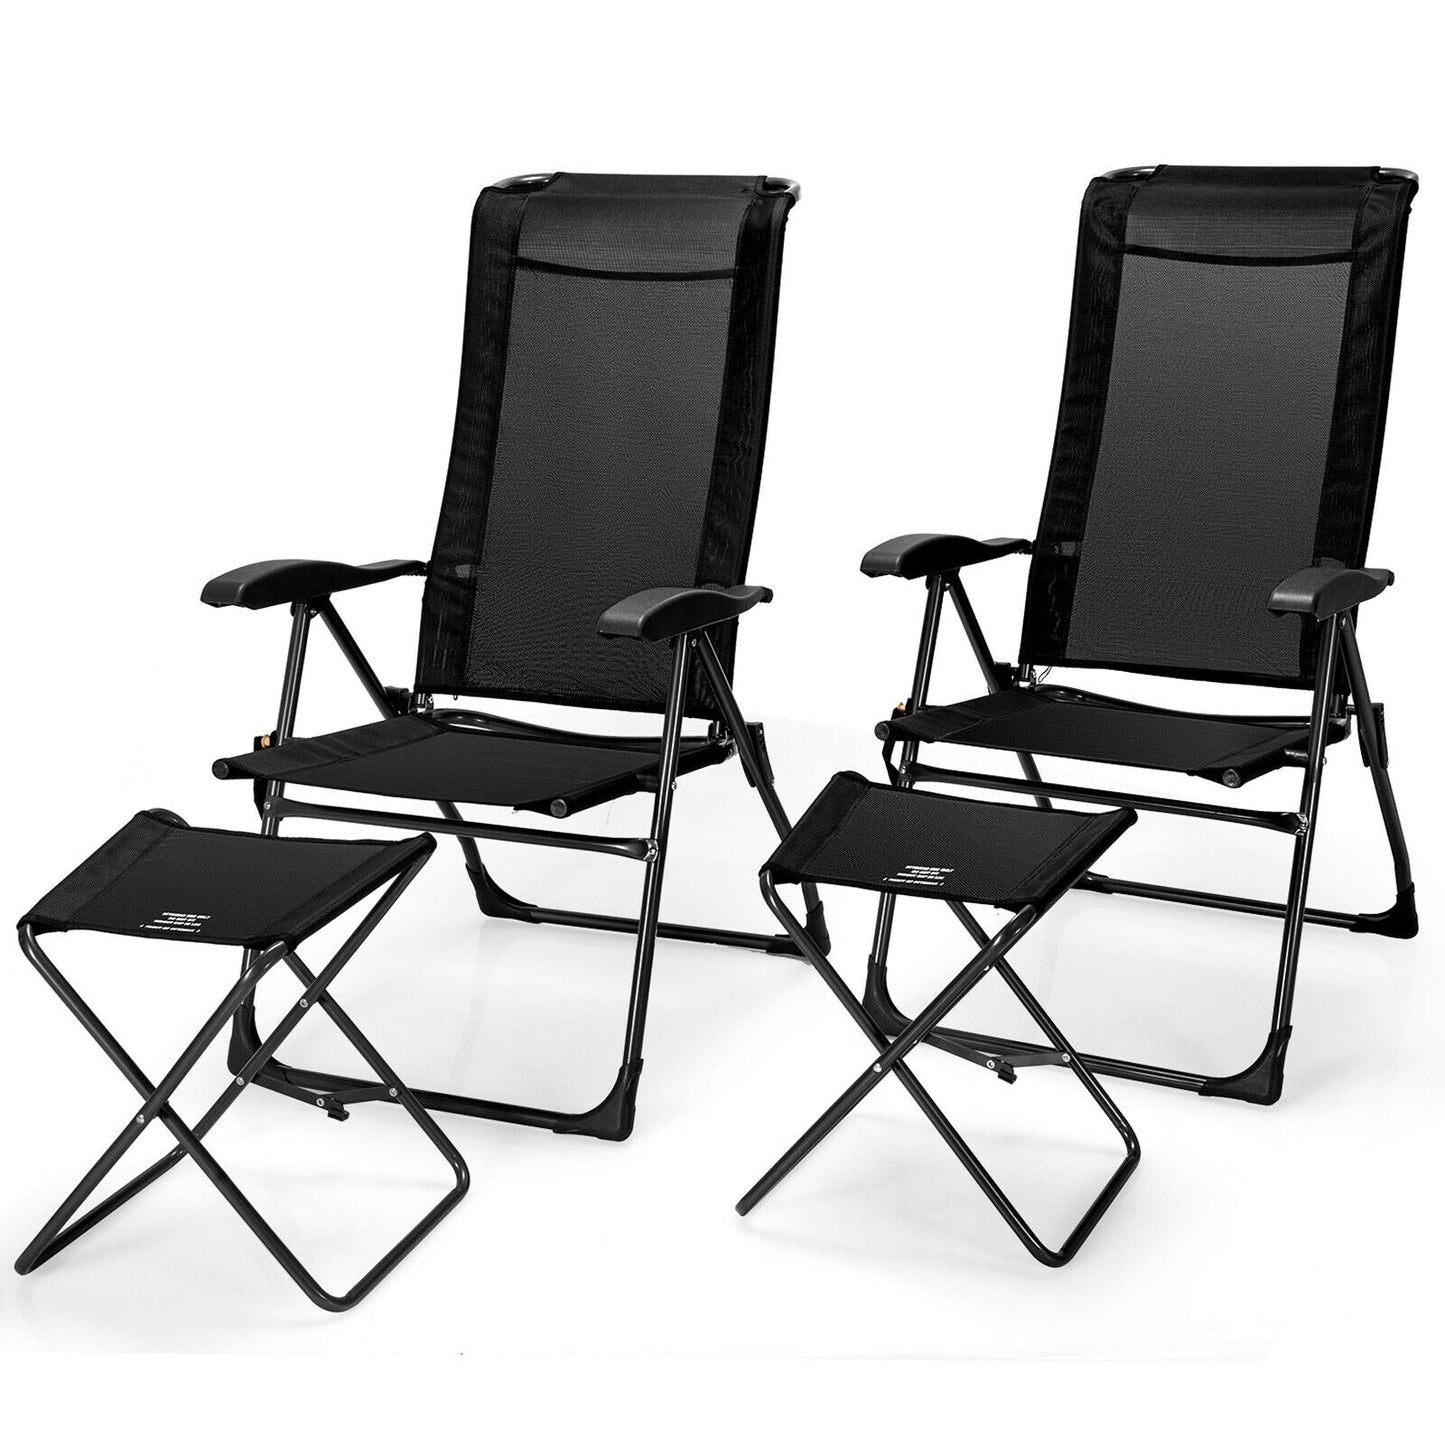 4 Pieces Patio Adjustable Back Folding Dining Chair Ottoman Set-Black